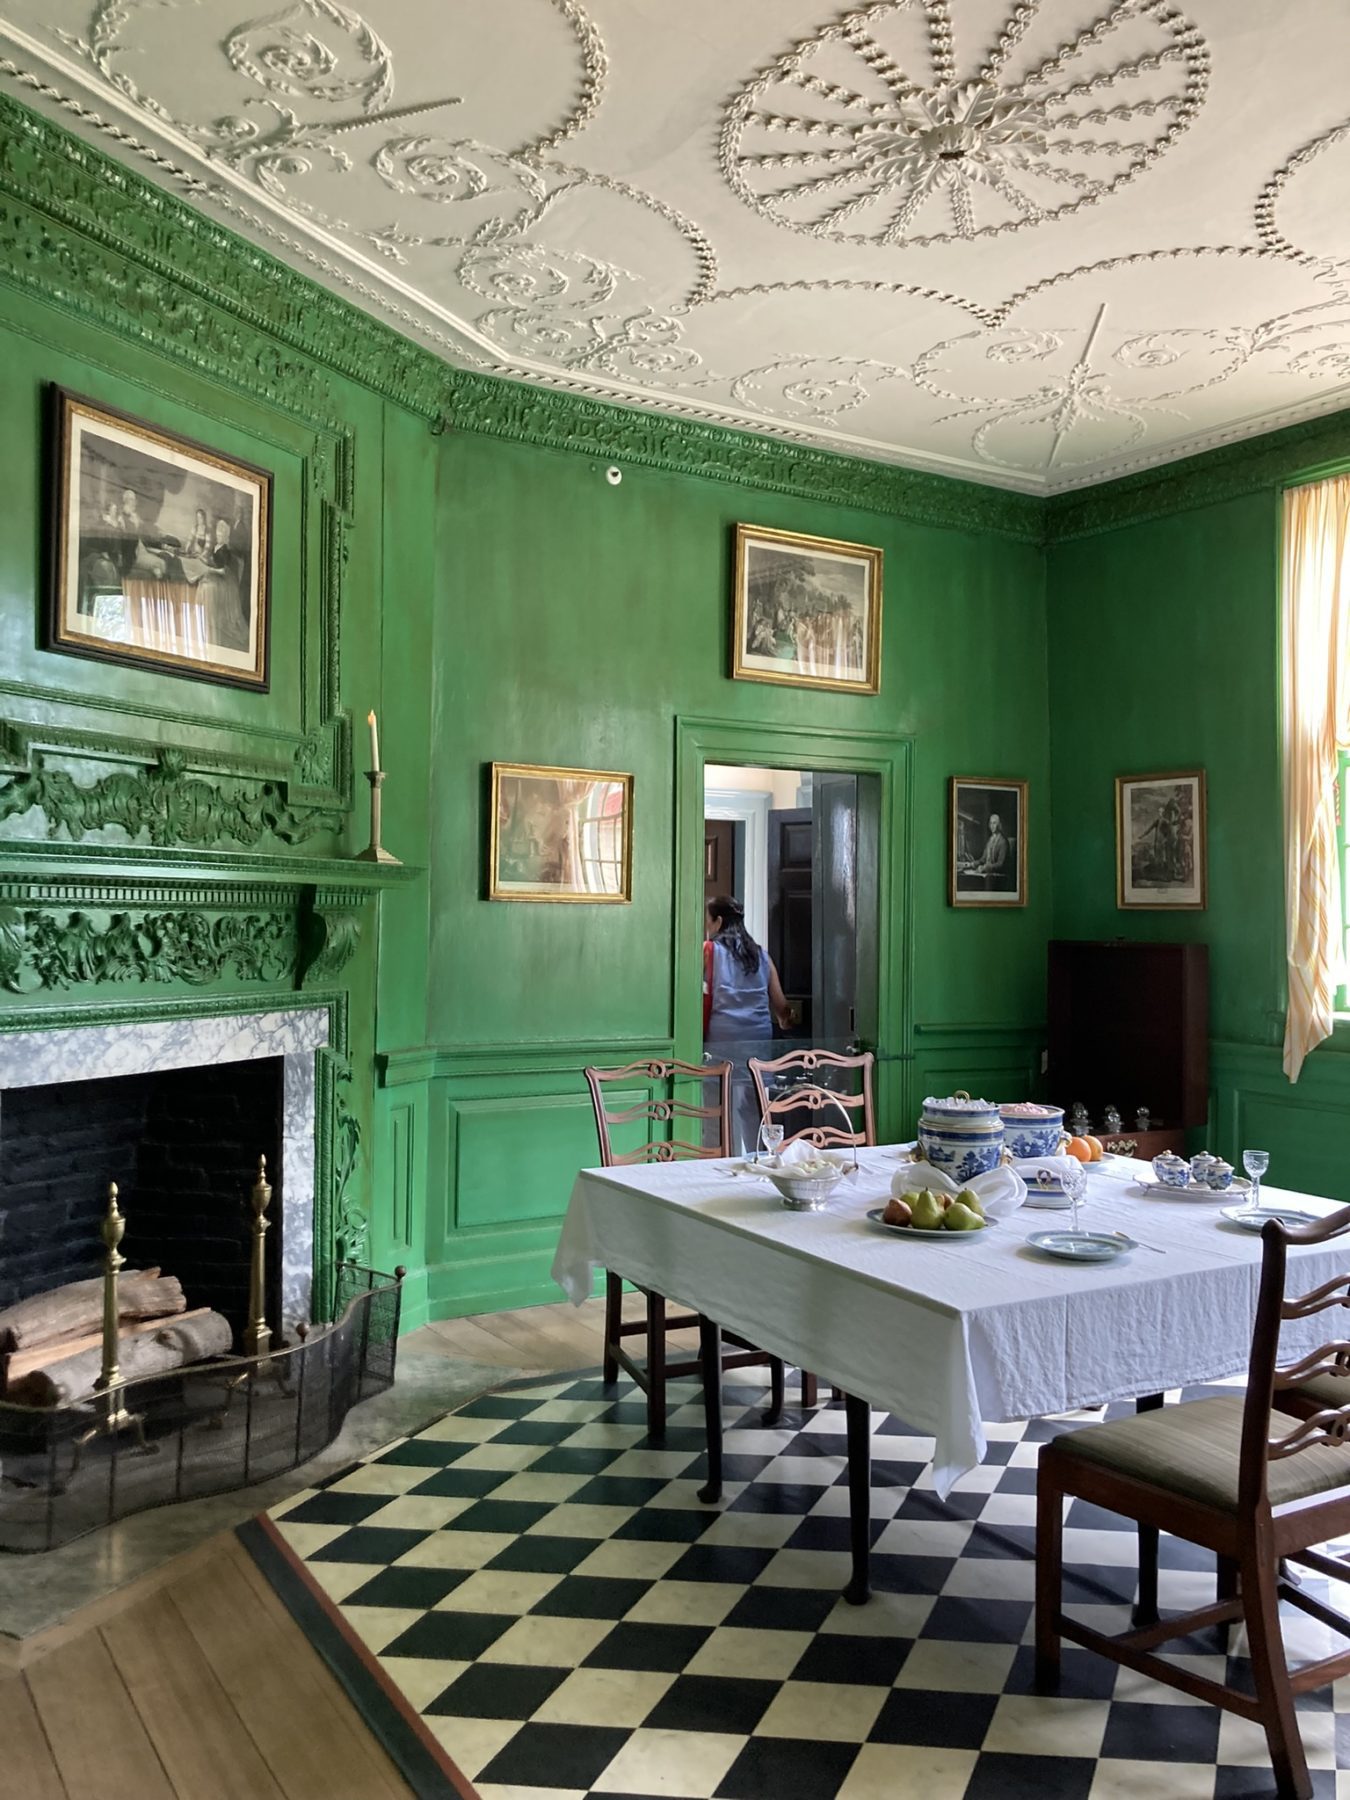 Mount Vernon Dining Room